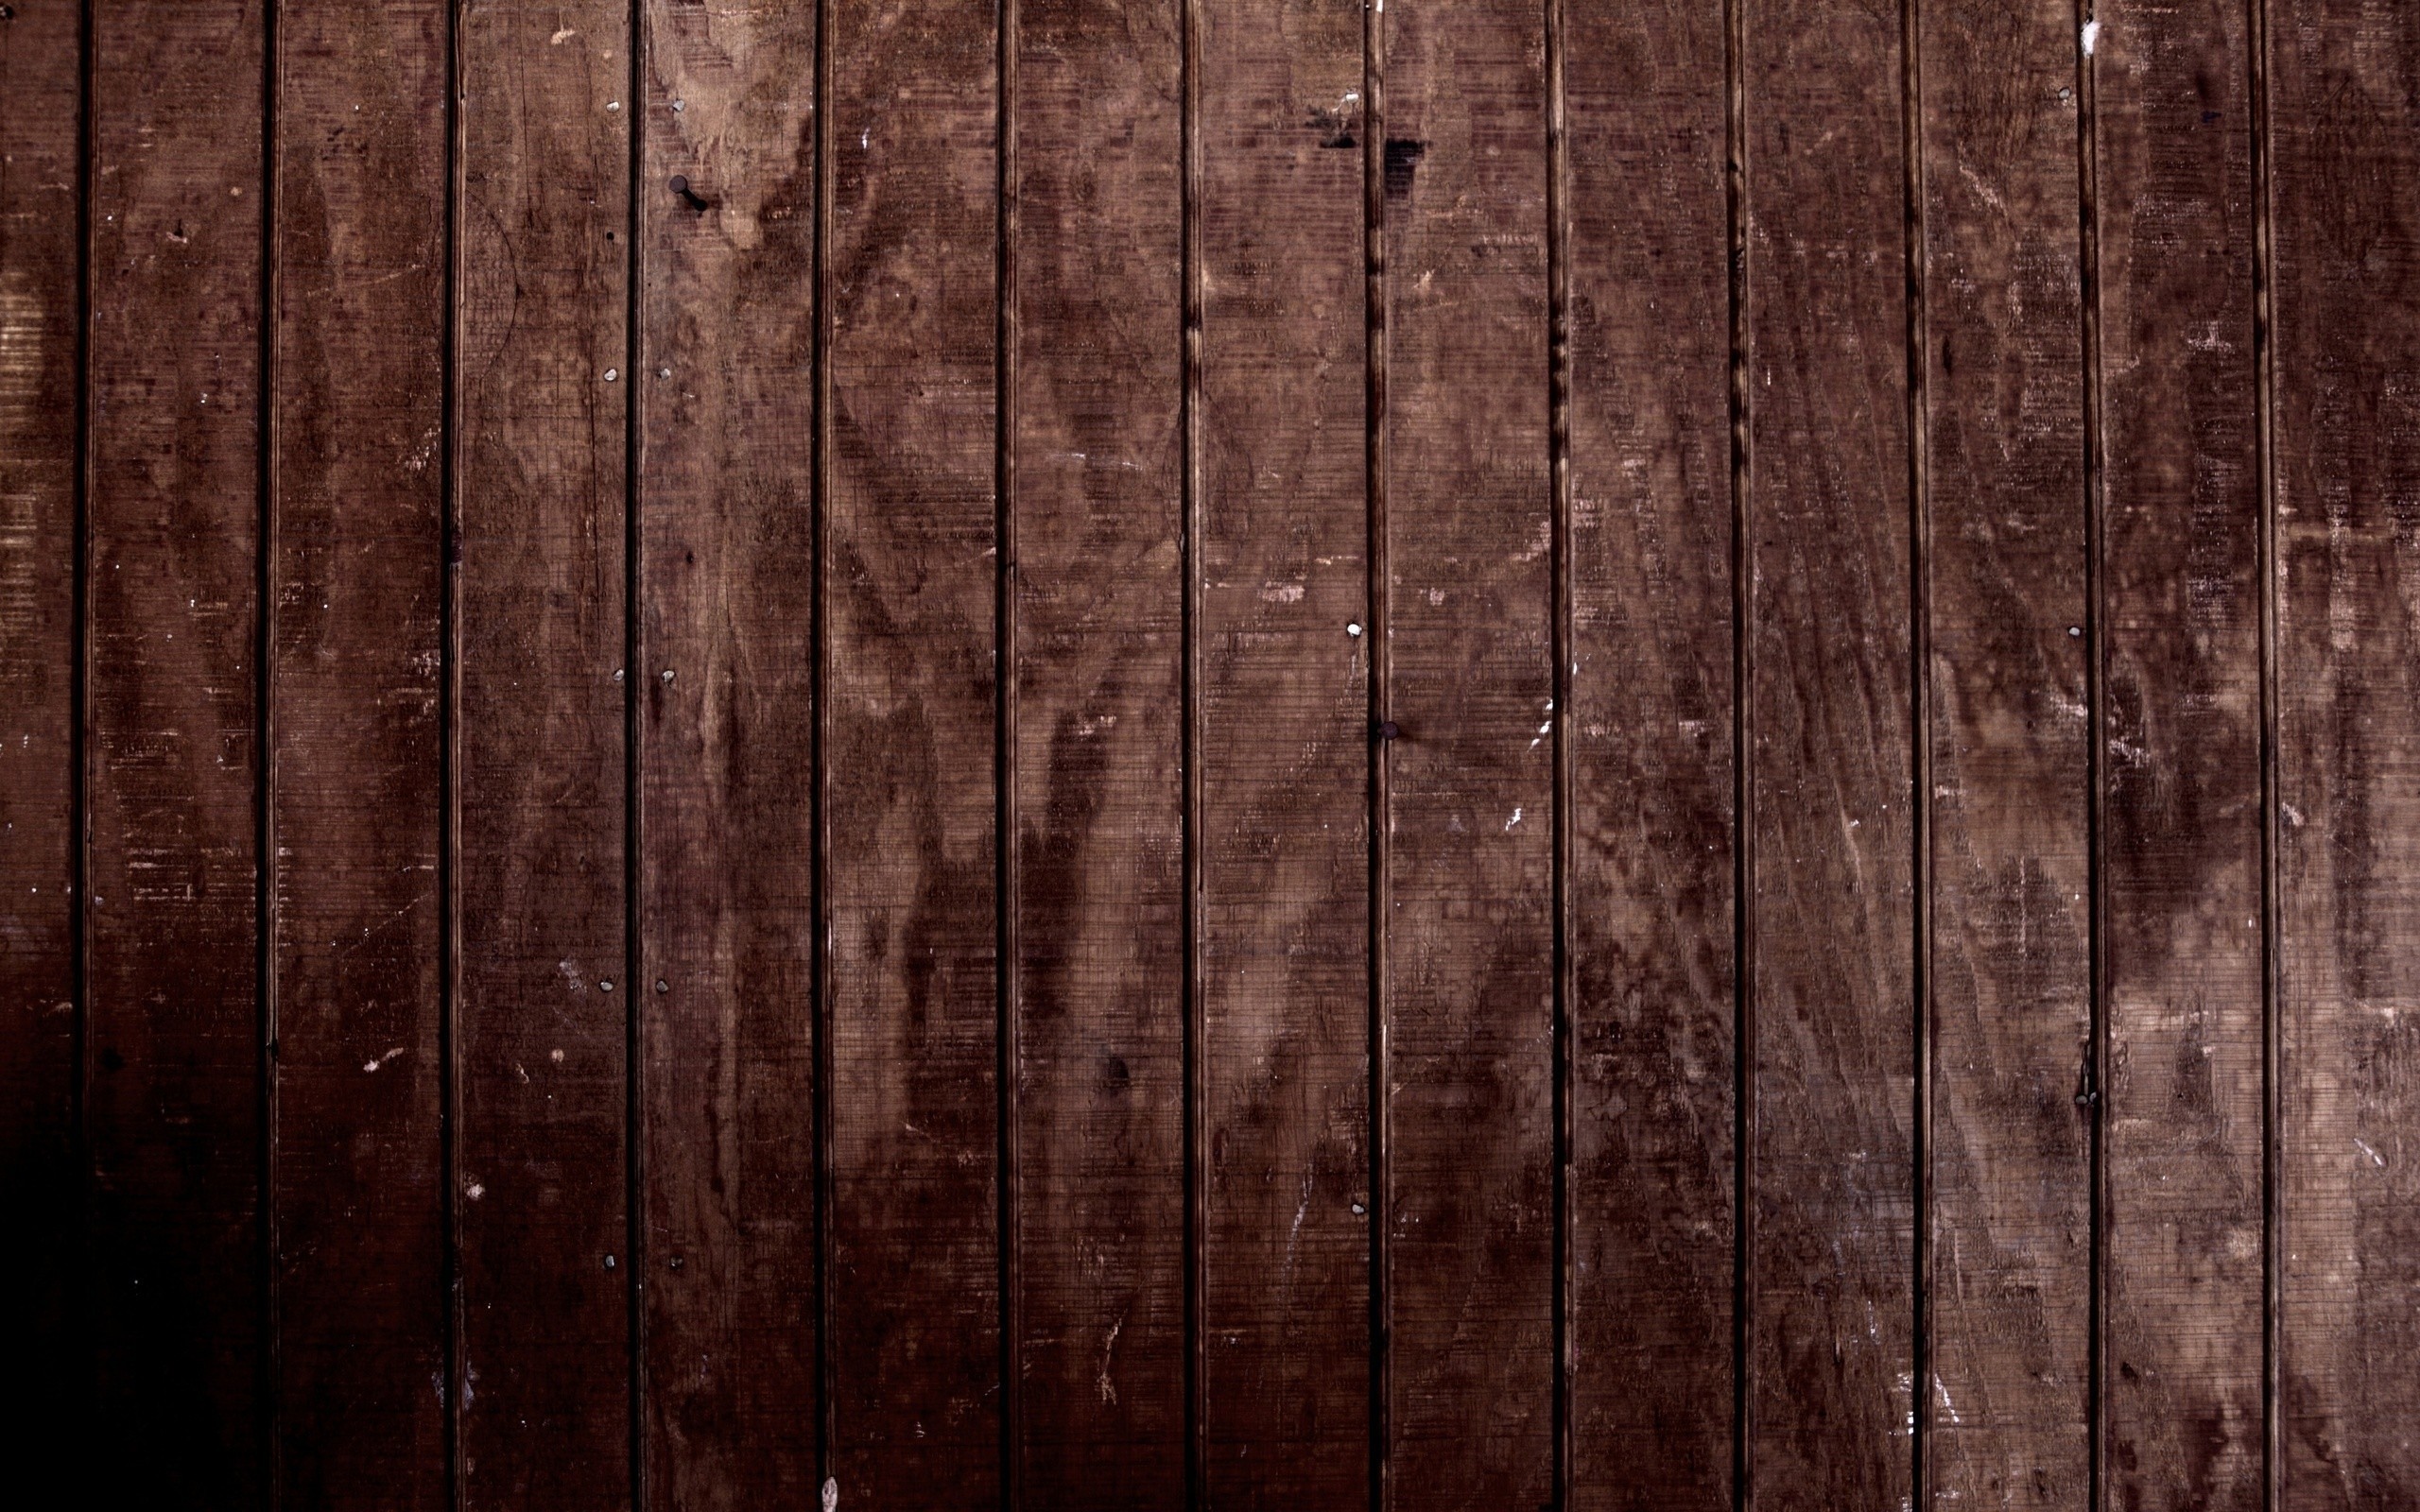 2560x1600 Old Wood Planks iPhone 6 Plus Hd Wallpaper Fresh 40 Wood Plank Wallpapers  On Wallpaperplay Of